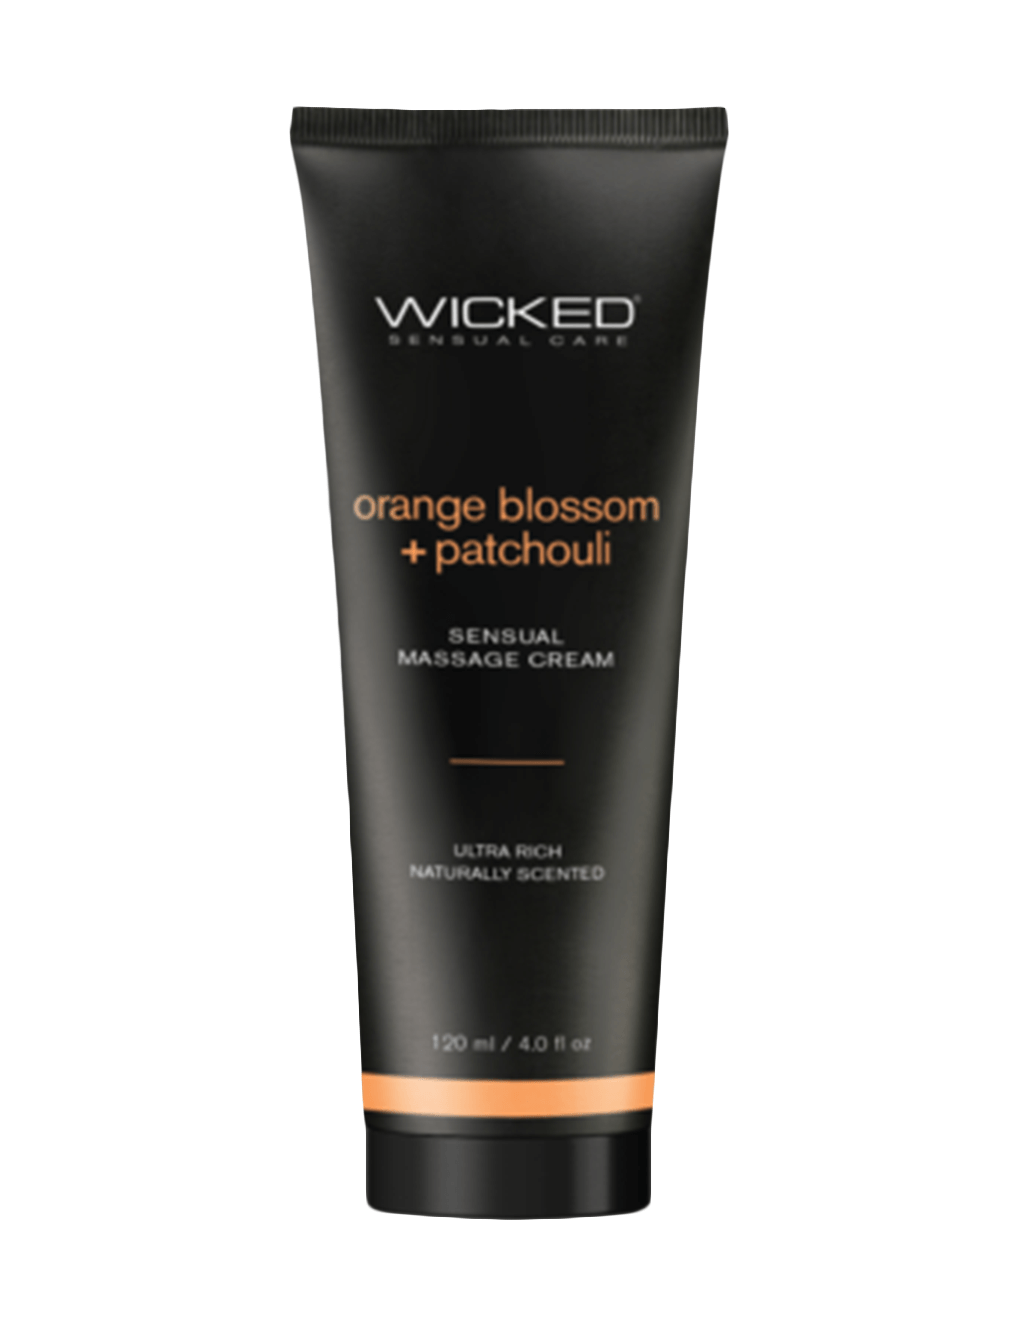 Wicked Orange Blossom & Patchouli Massage Cream - Main